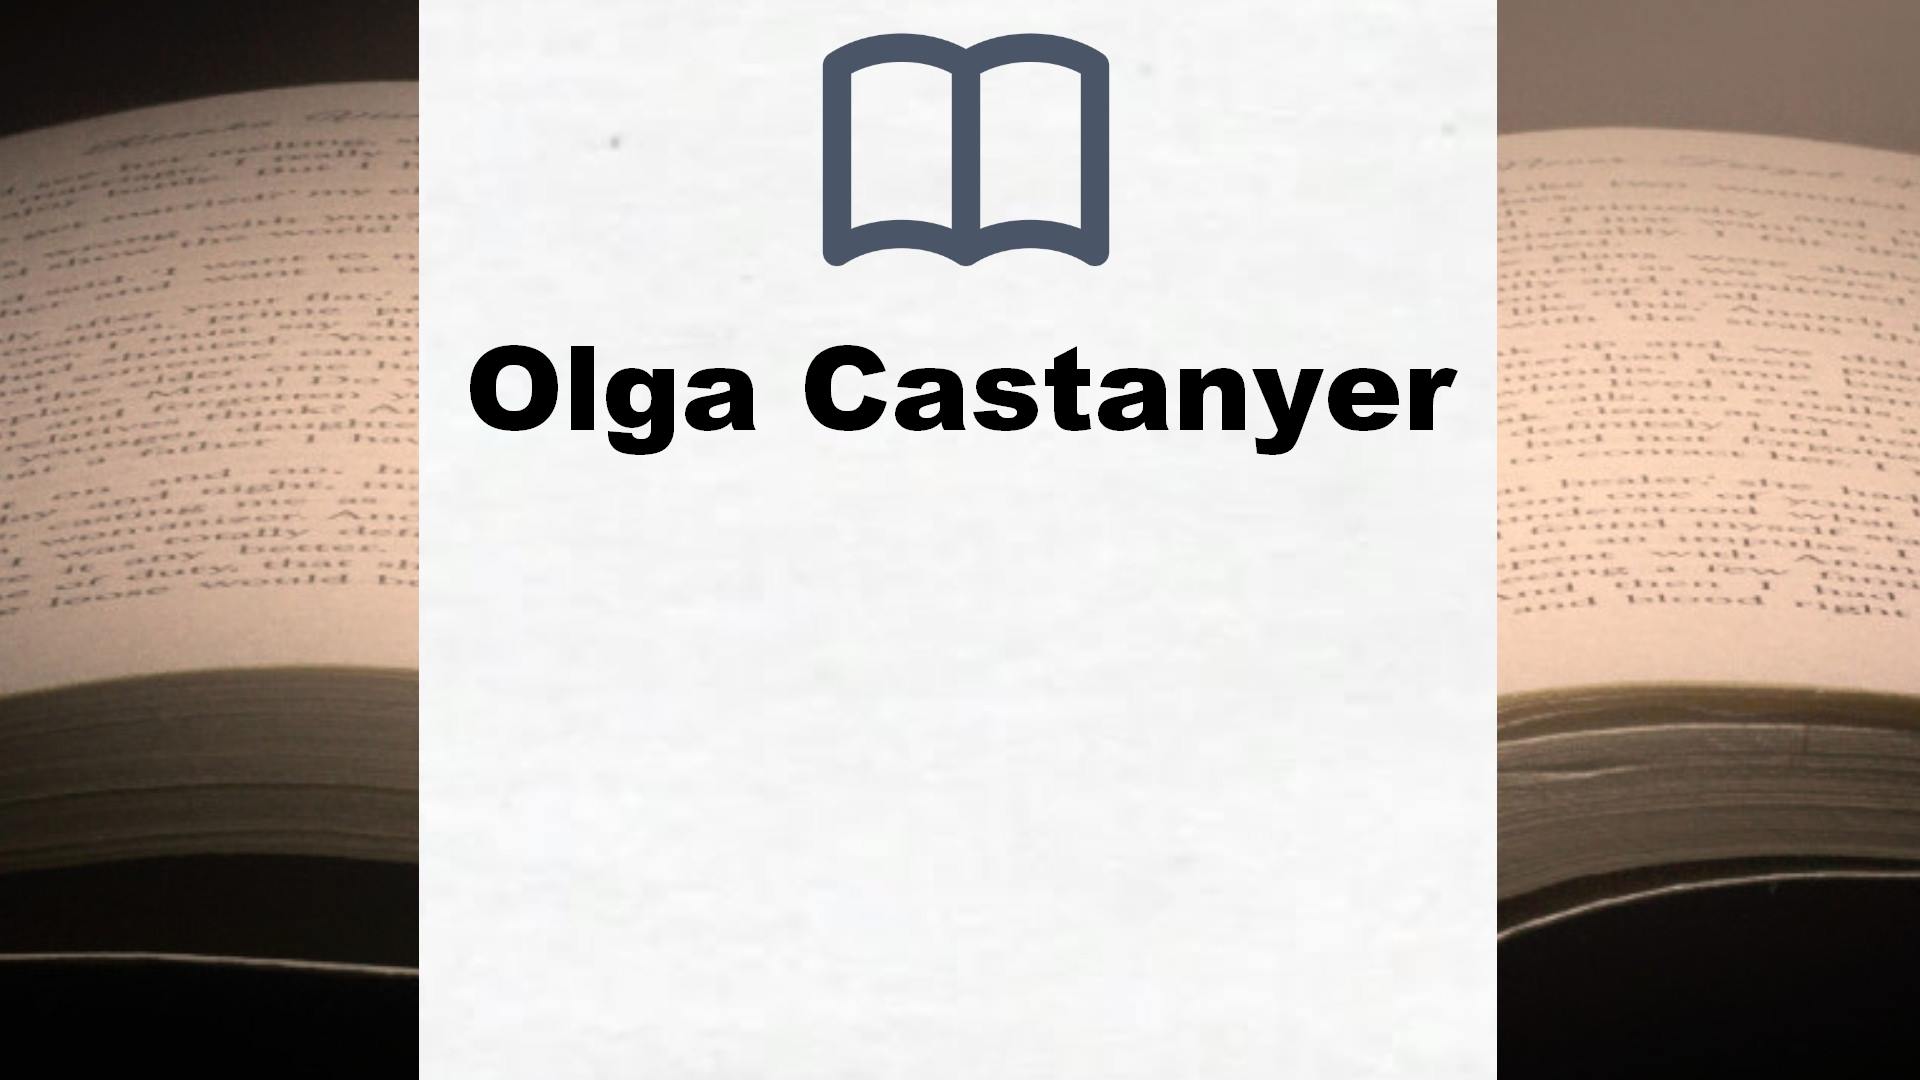 Libros Olga Castanyer